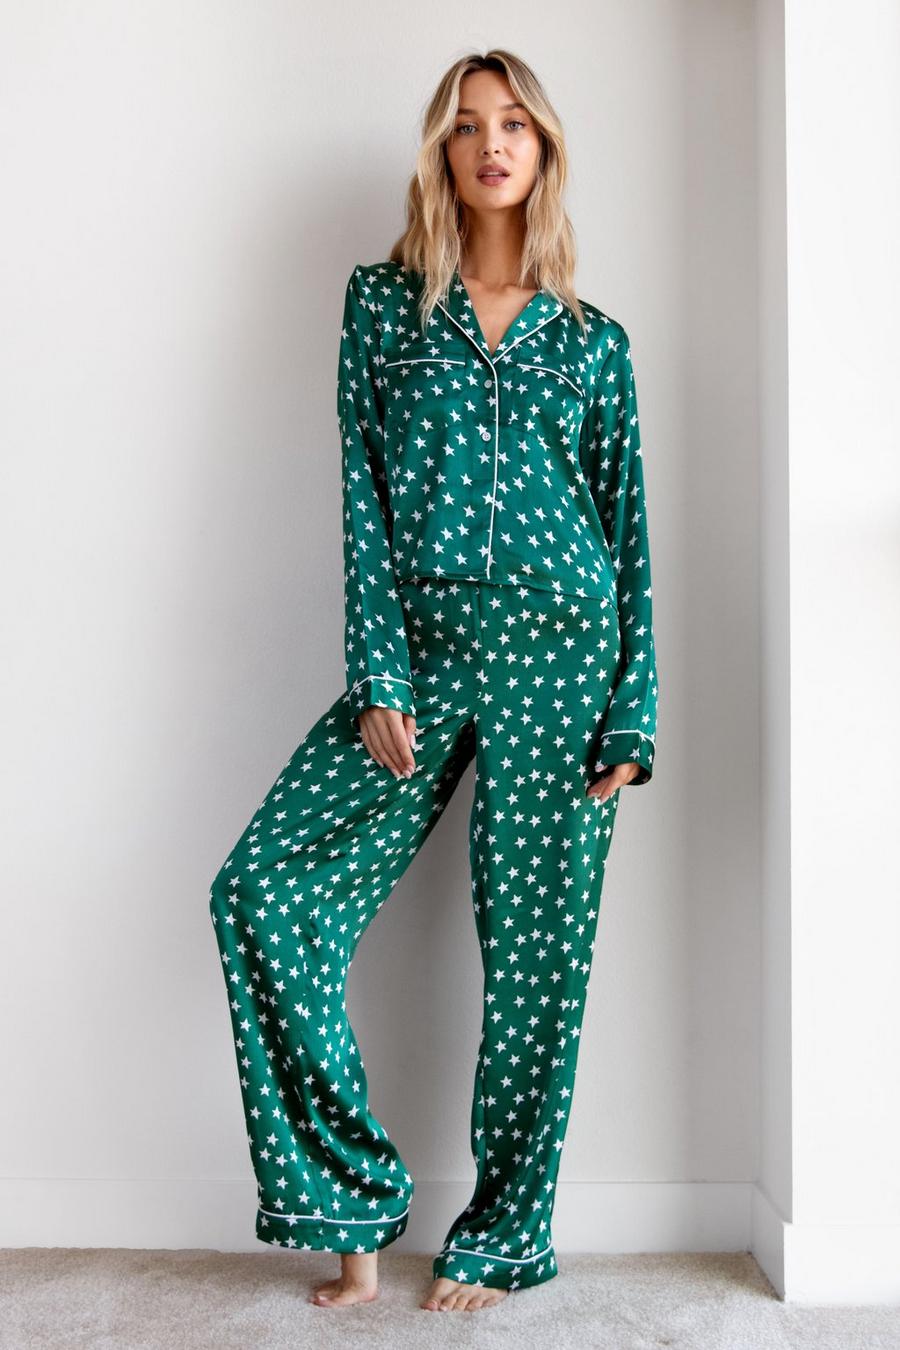 Star Print Satin Pajama Shirt and Pants Set